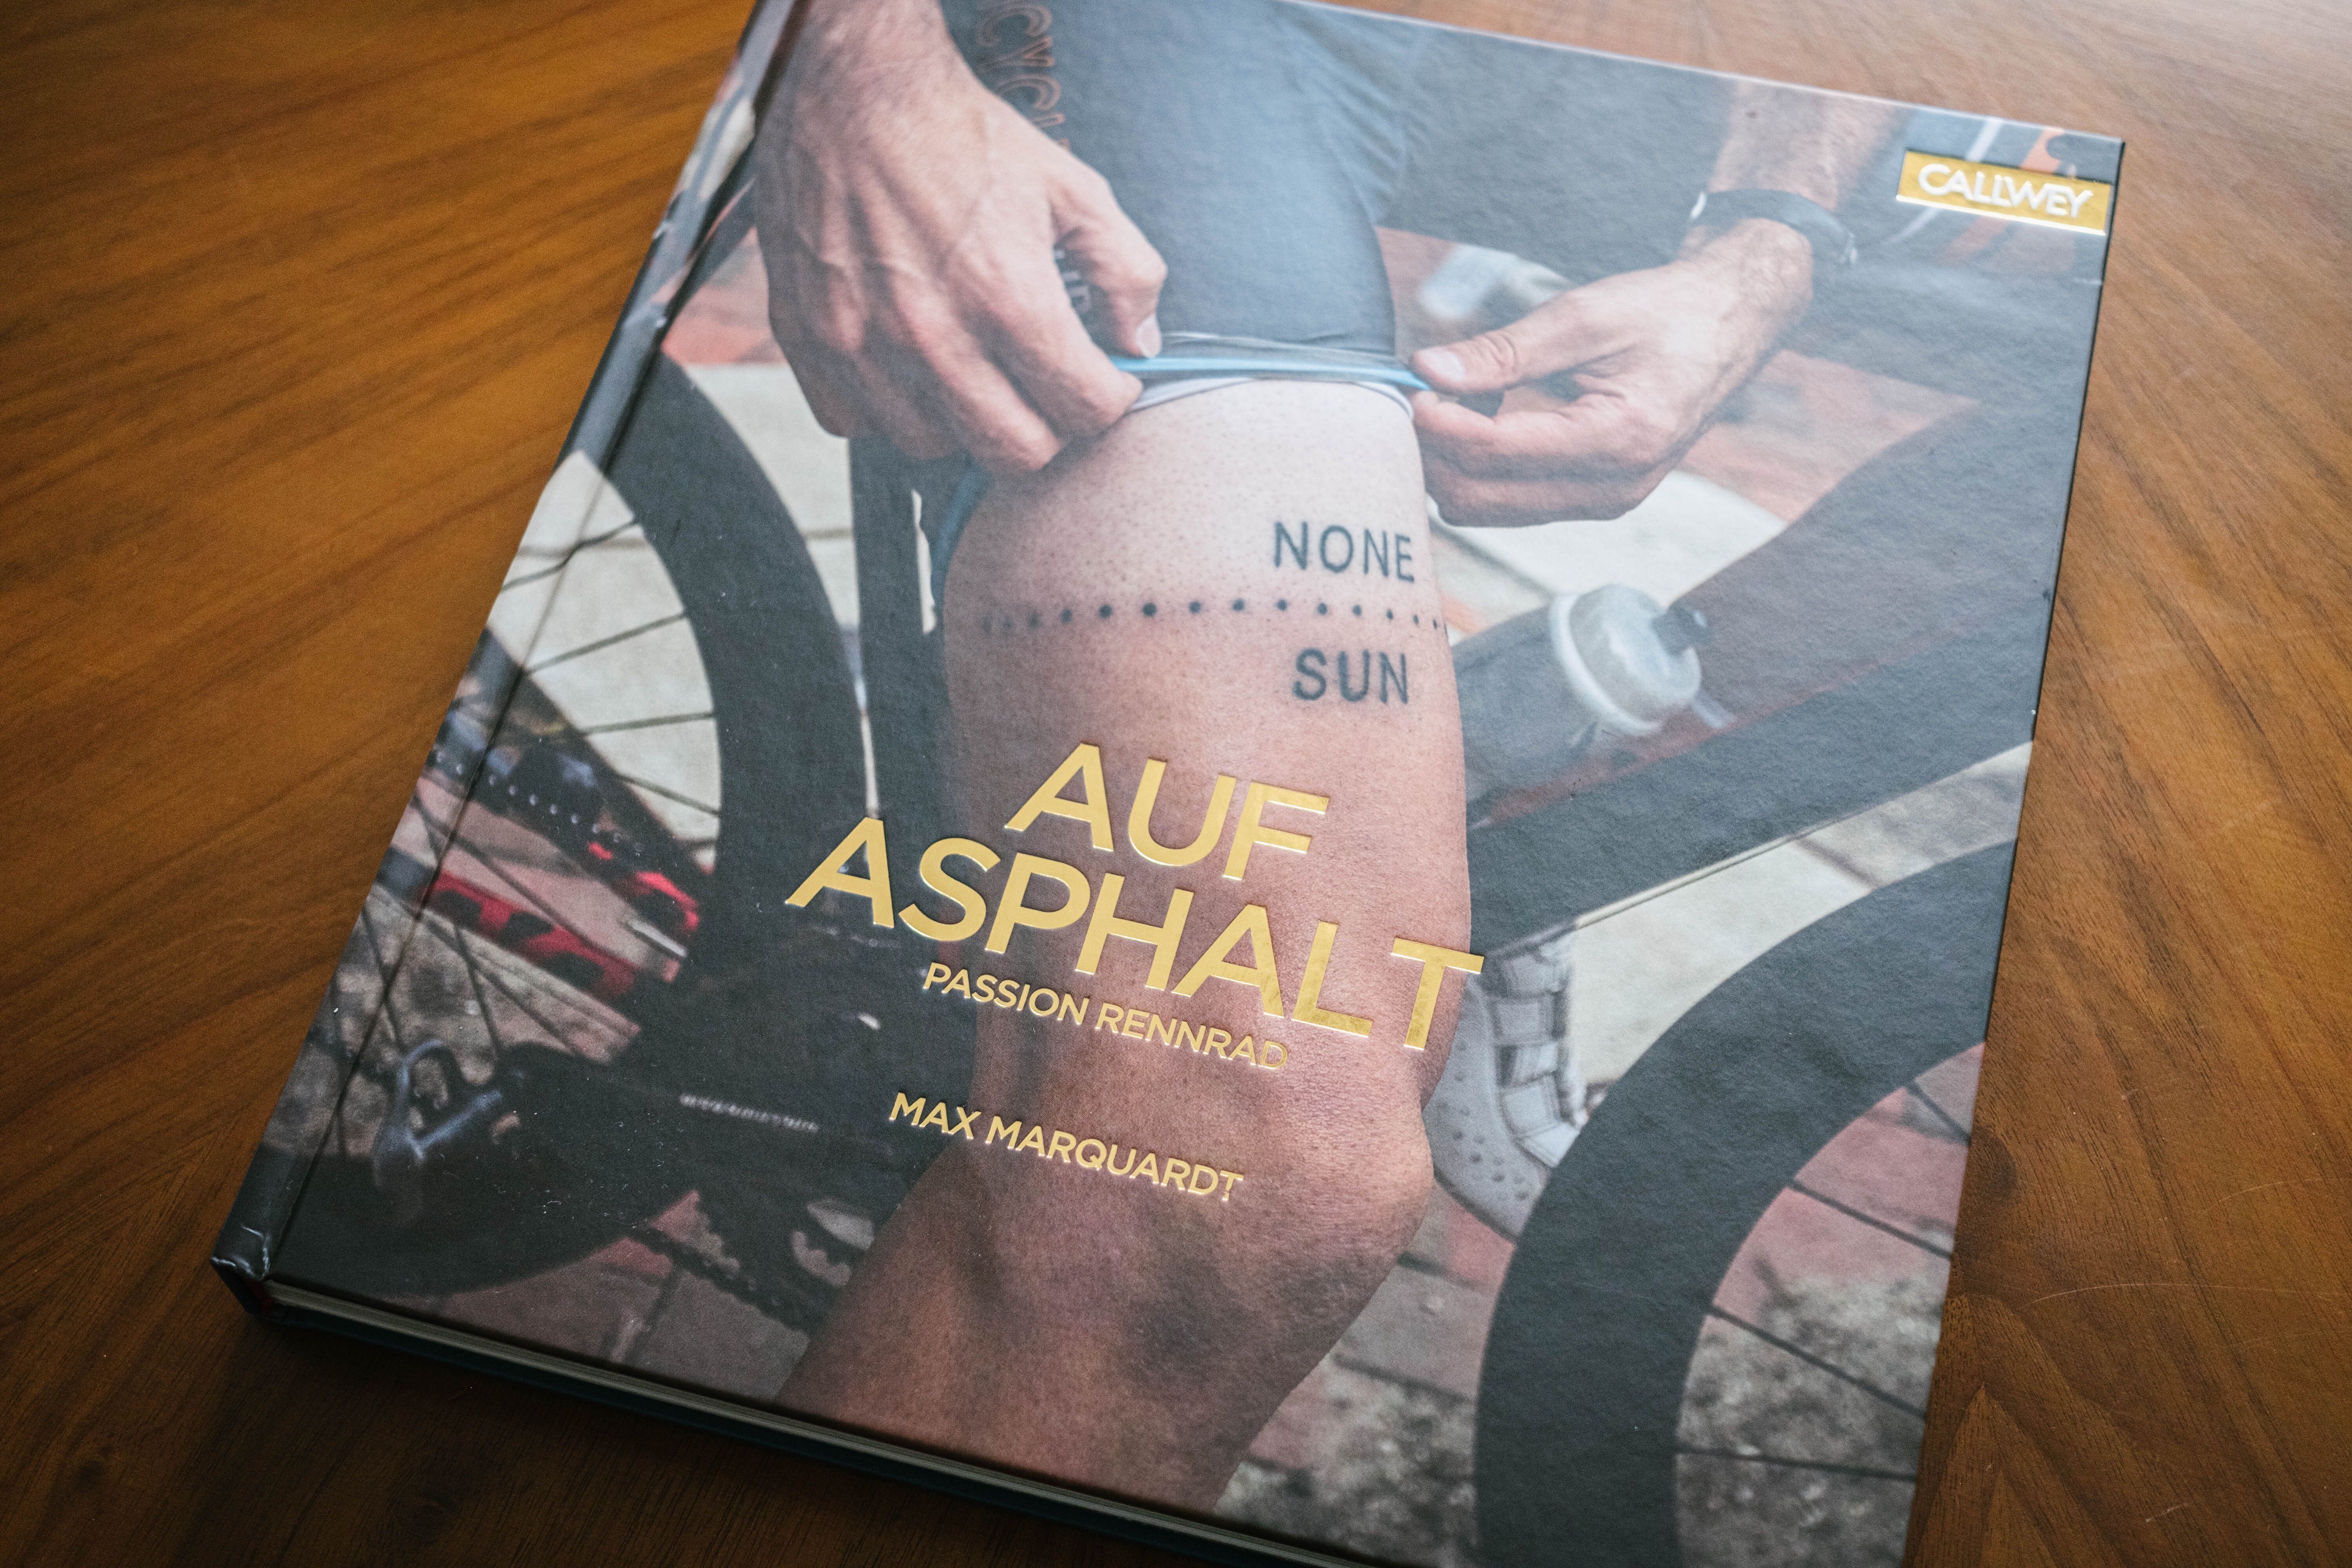 Auf Asphalt a book by Max Marquardt